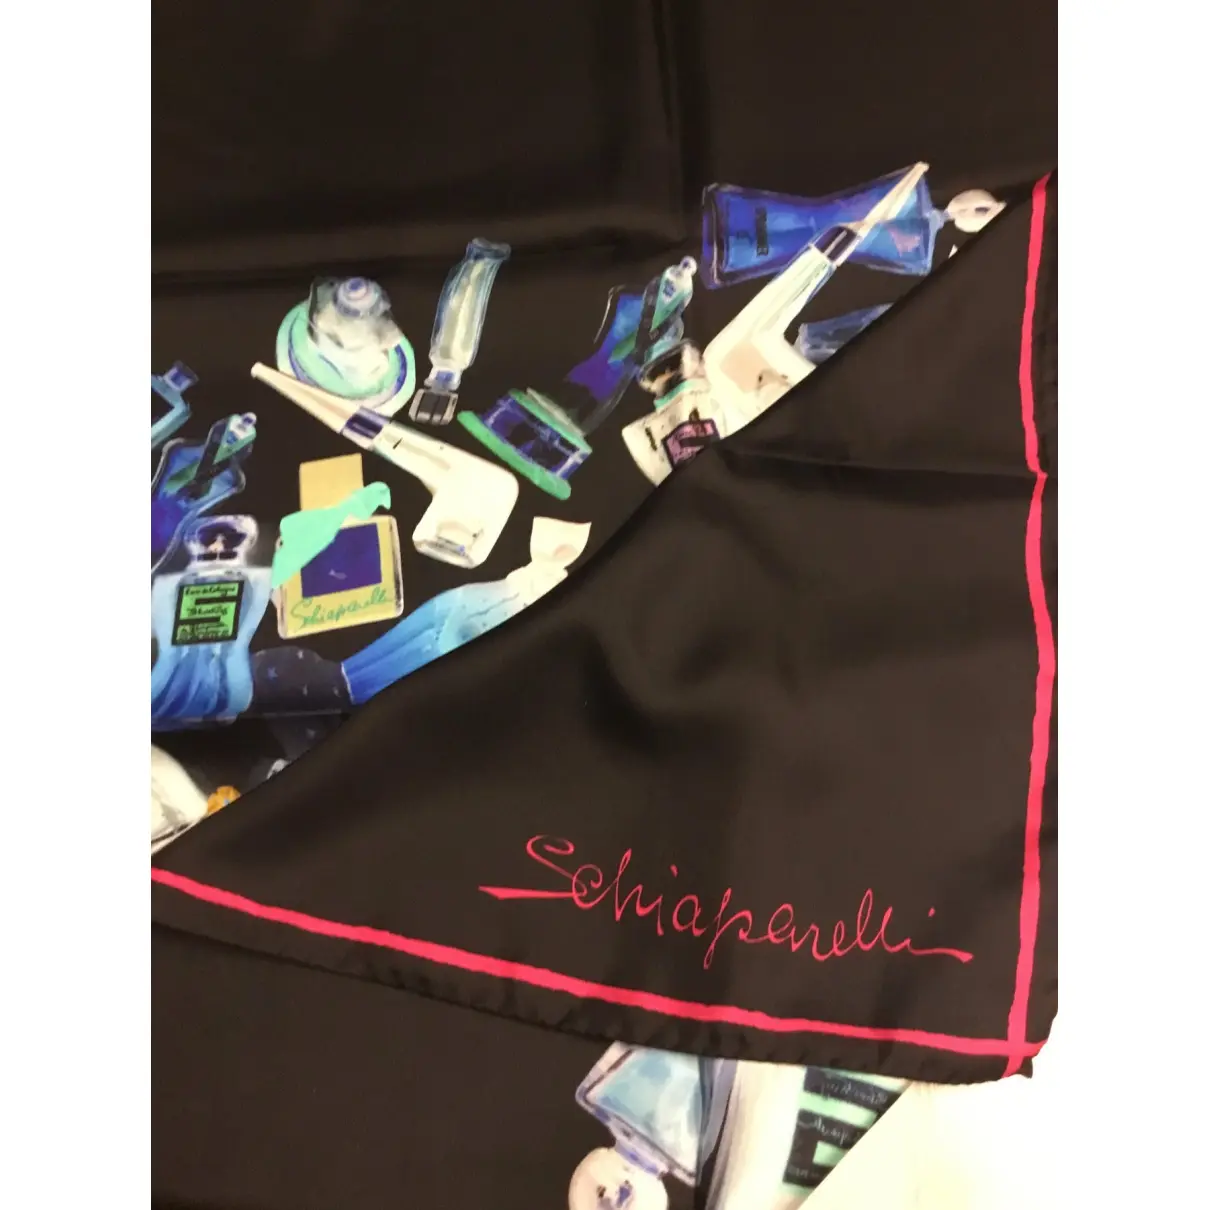 Buy Schiaparelli Silk scarf online